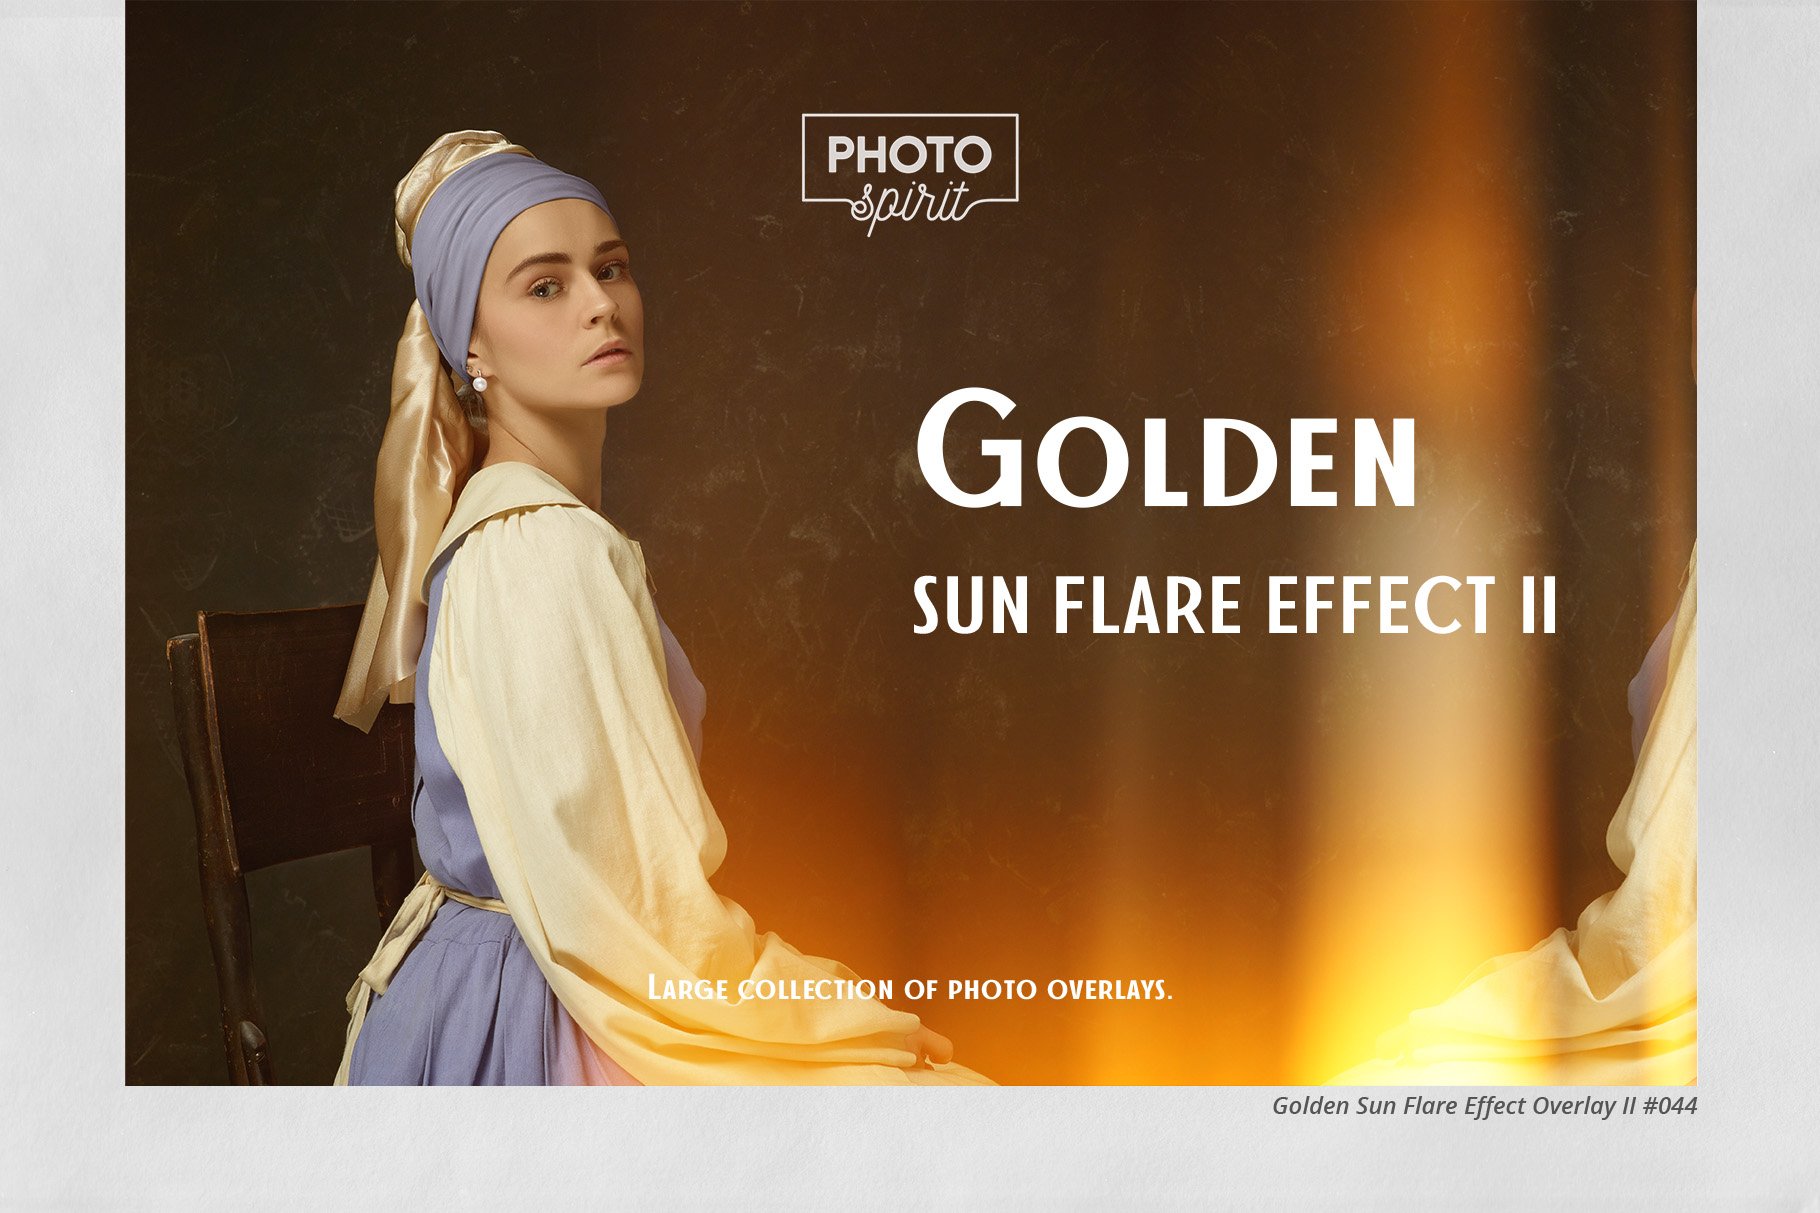 Golden Sun Flare Overlay Effect IIcover image.